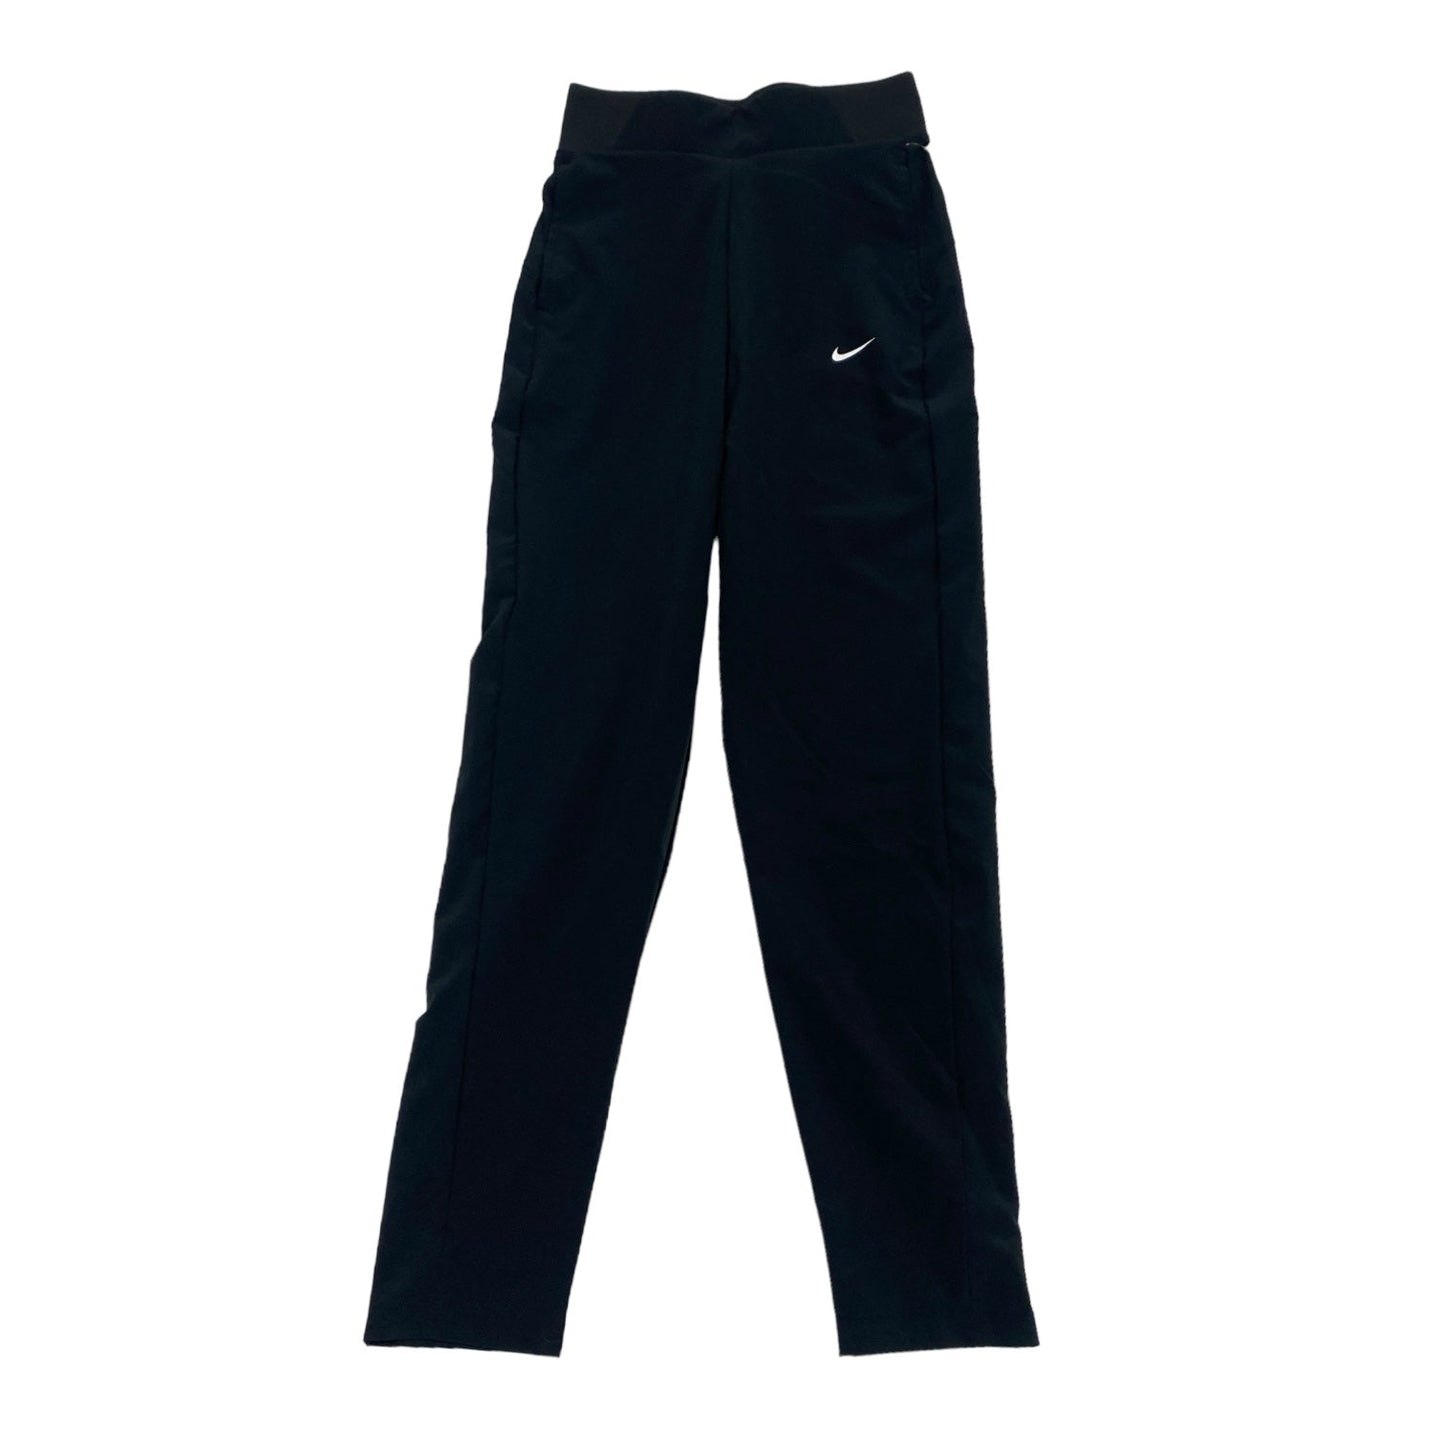 Black Athletic Pants Nike Apparel, Size Xs